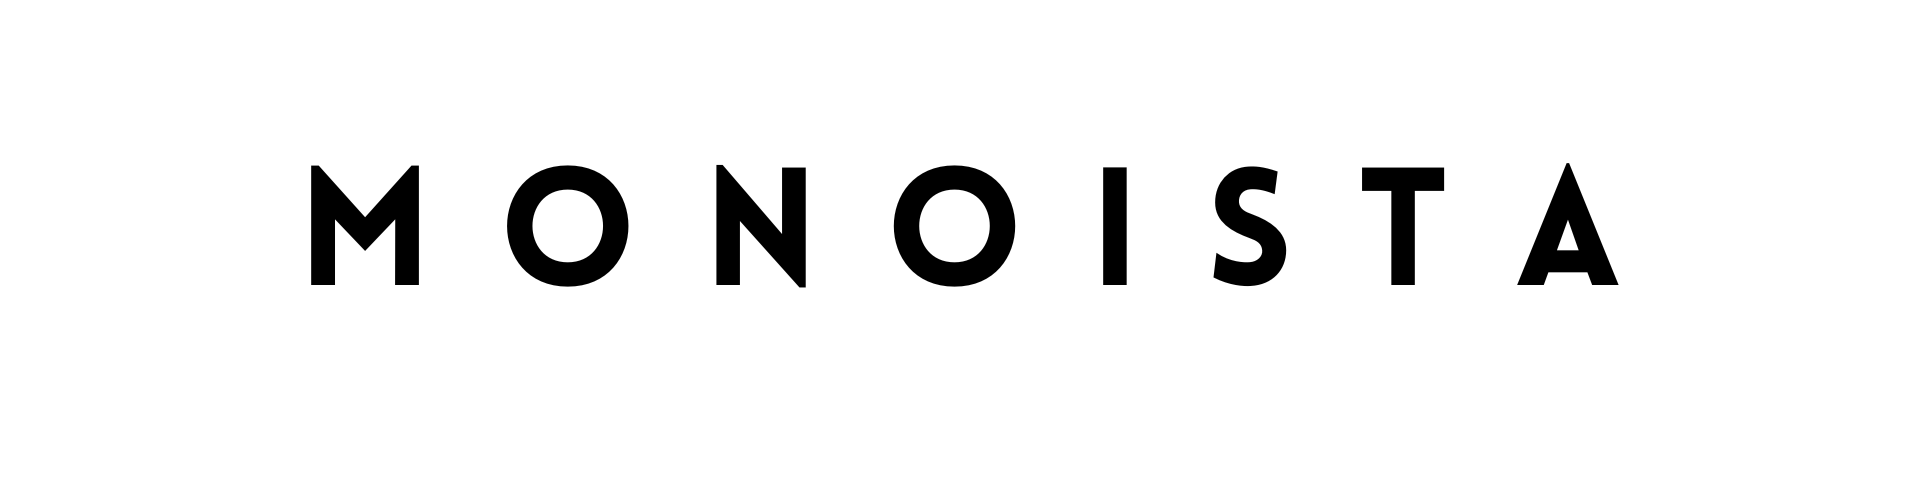 MONOISTA logo - Winkelschleifer